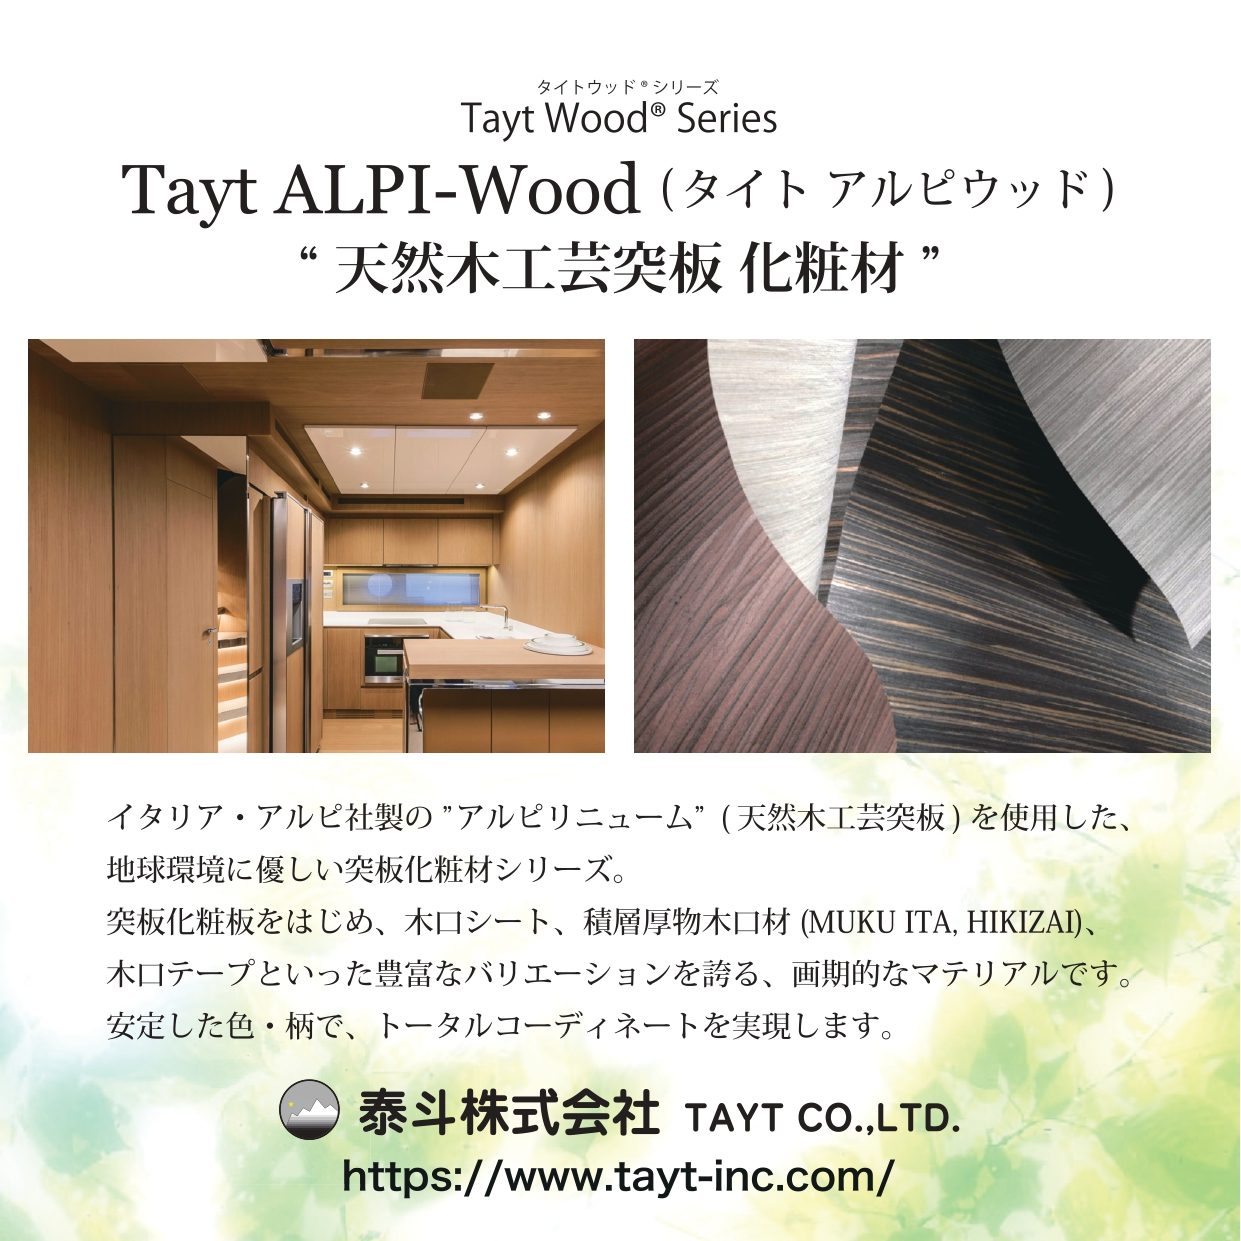 T-1050-0 天然木工芸突板化粧板 タイト アルピウッド アメリカンウォールナット柾 4.0mm×3尺×8尺 クリアー